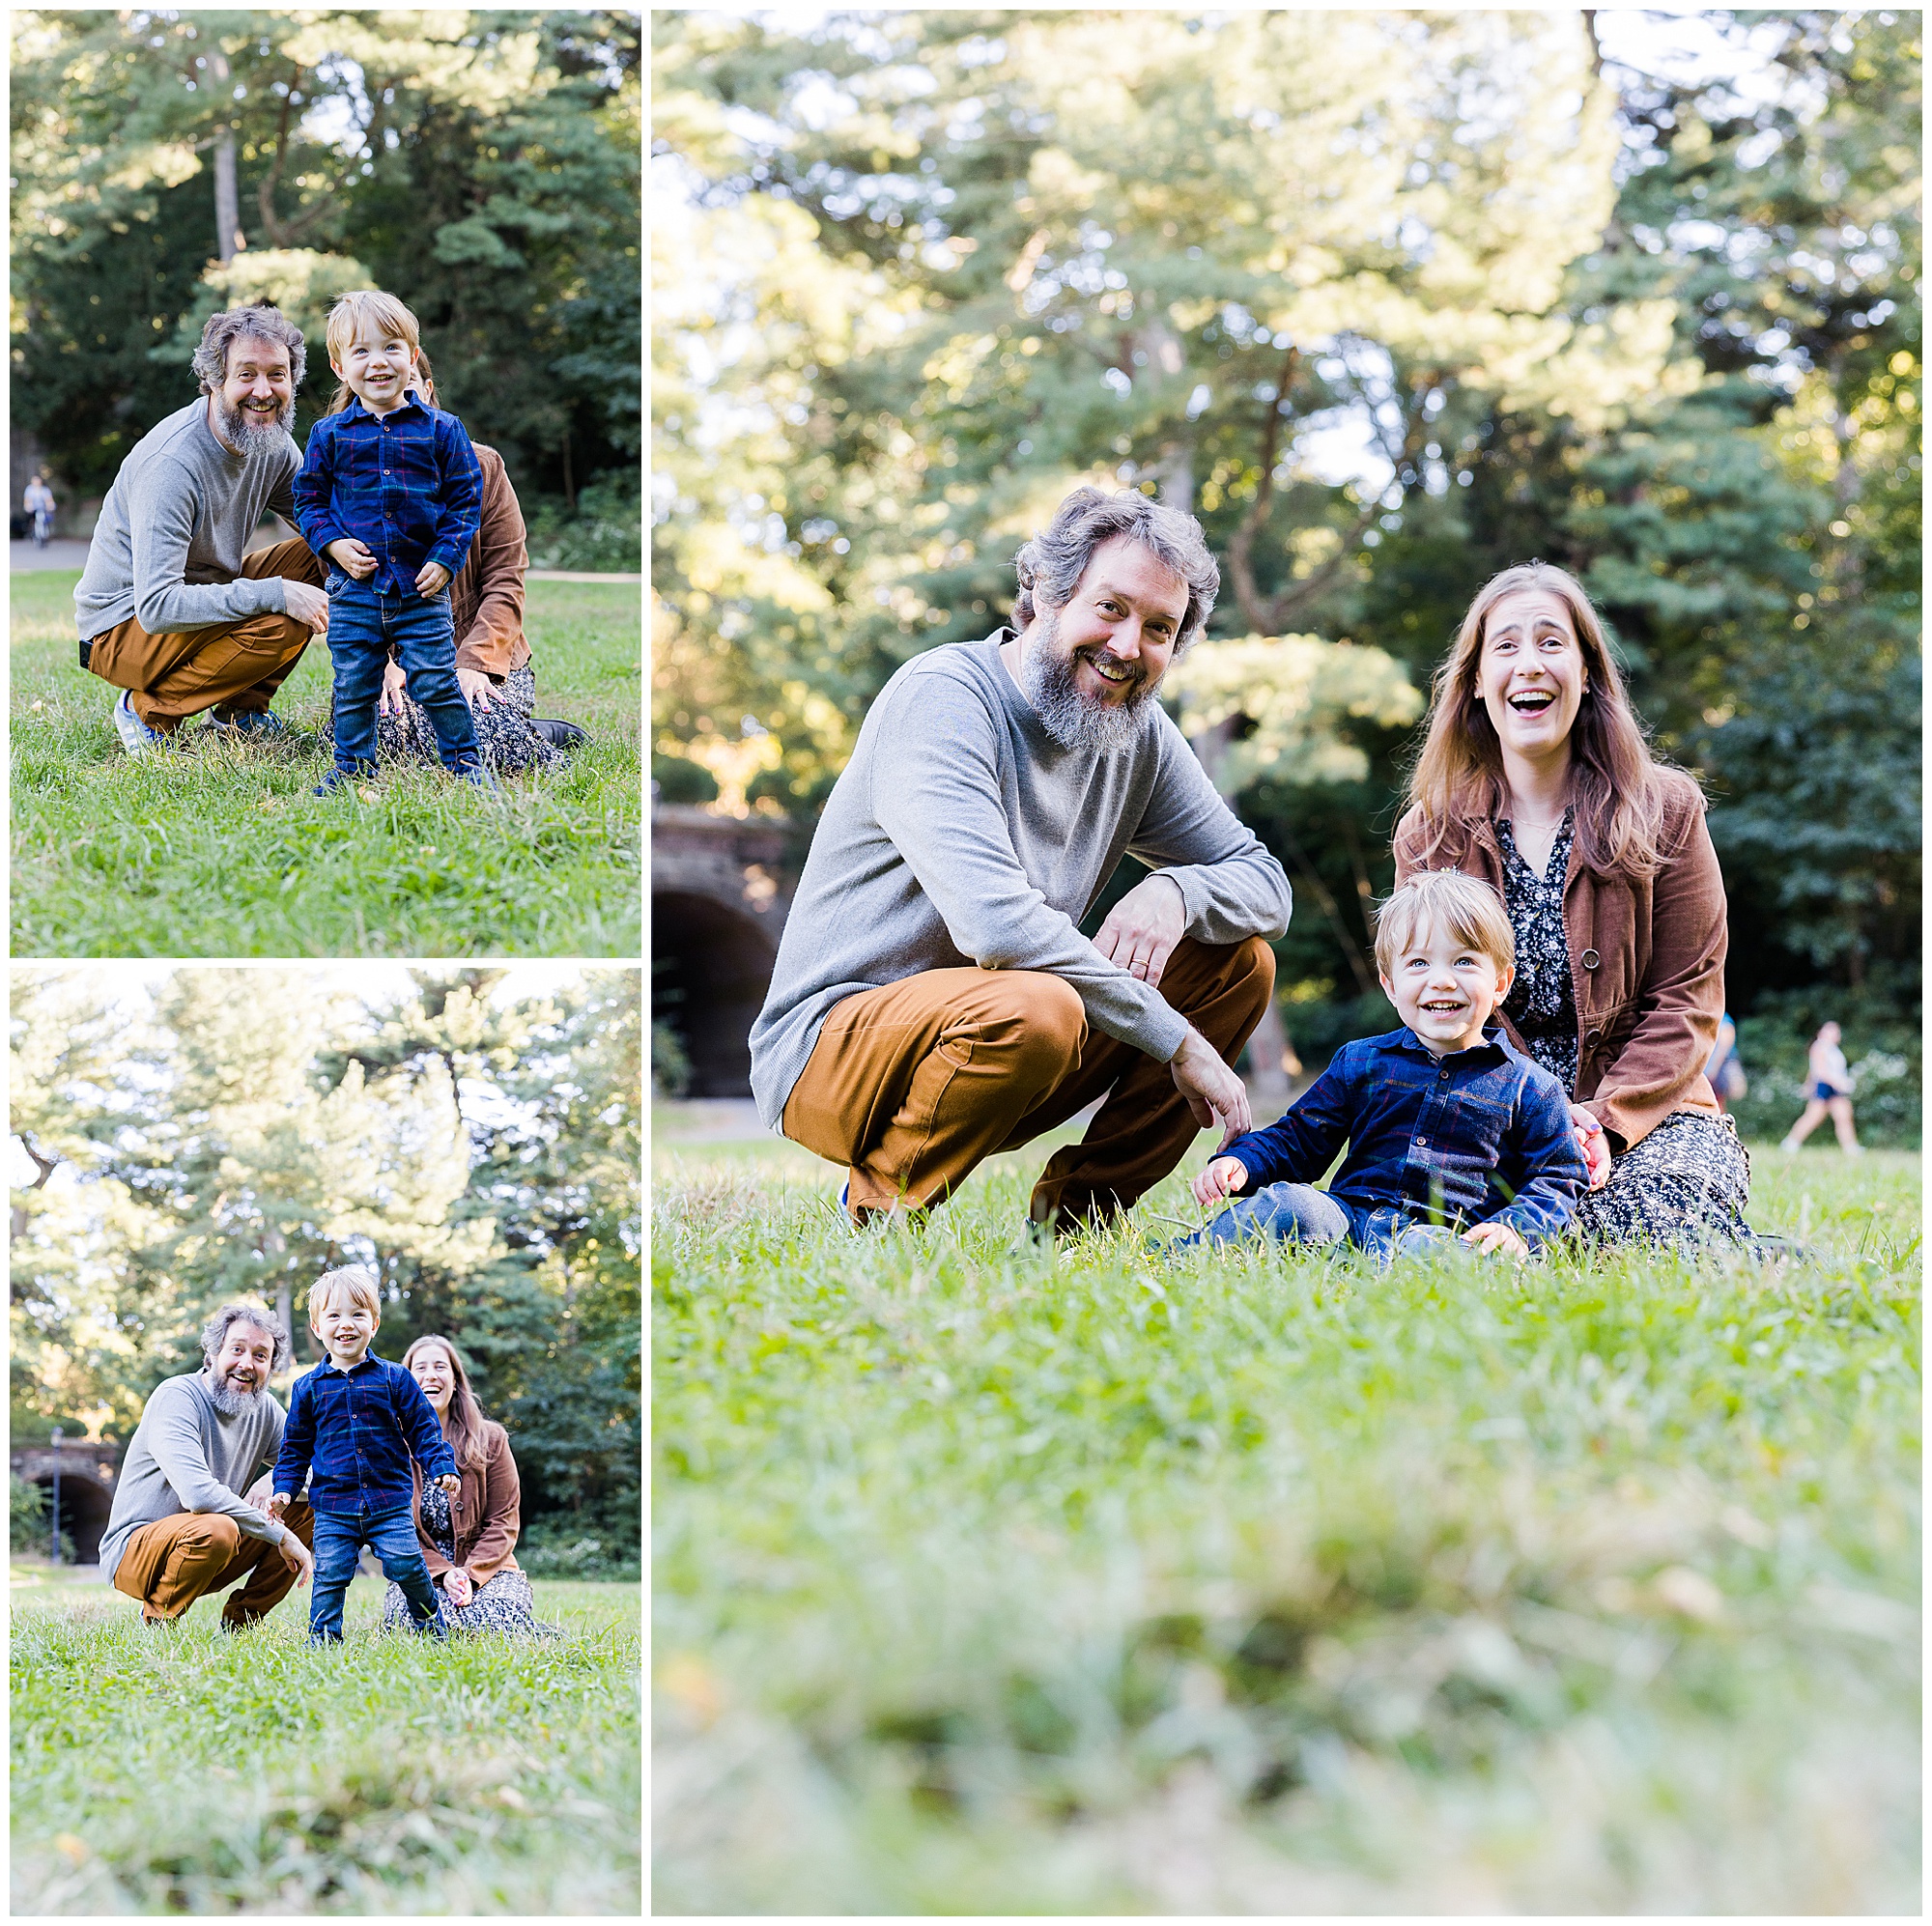 Joyful family photo session in New York